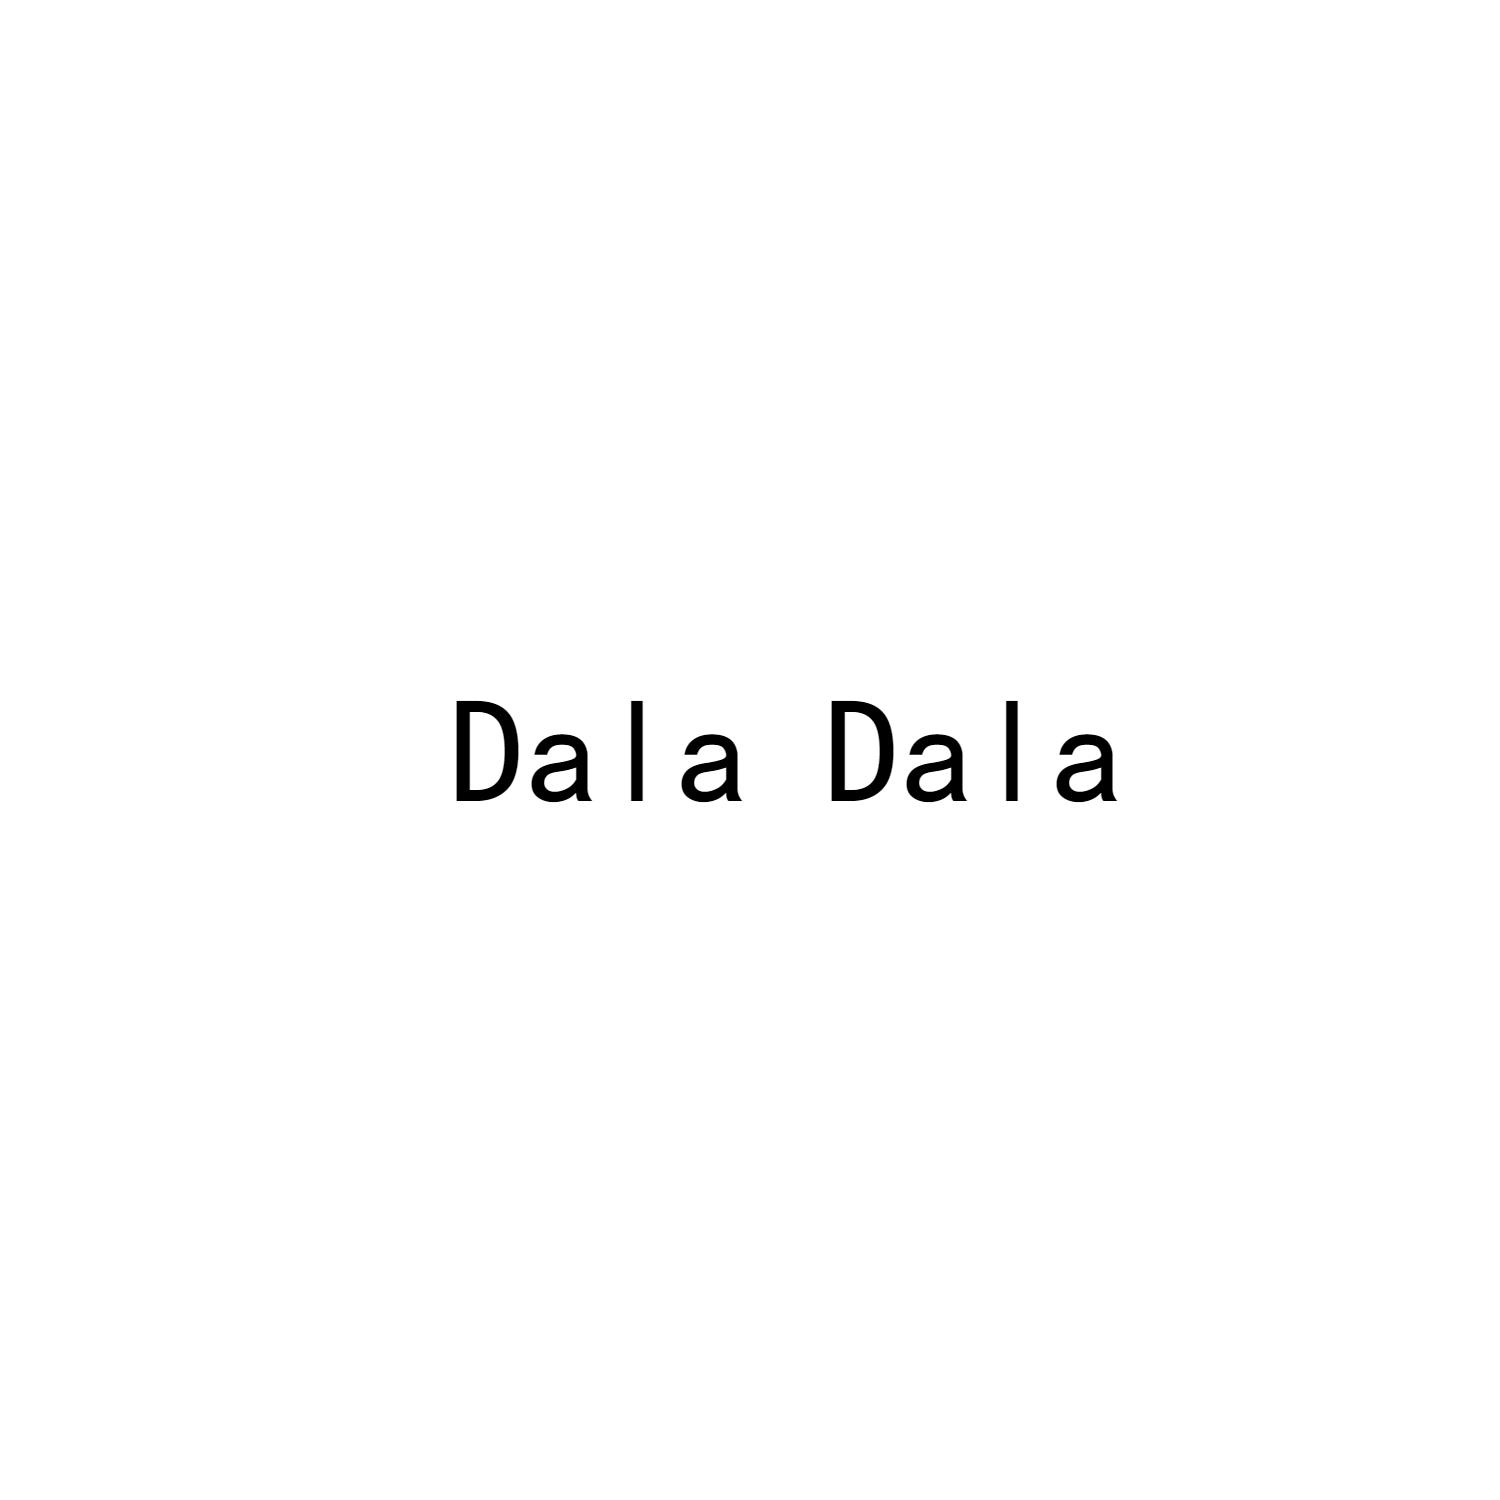 41类-教育文娱DALA DALA商标转让